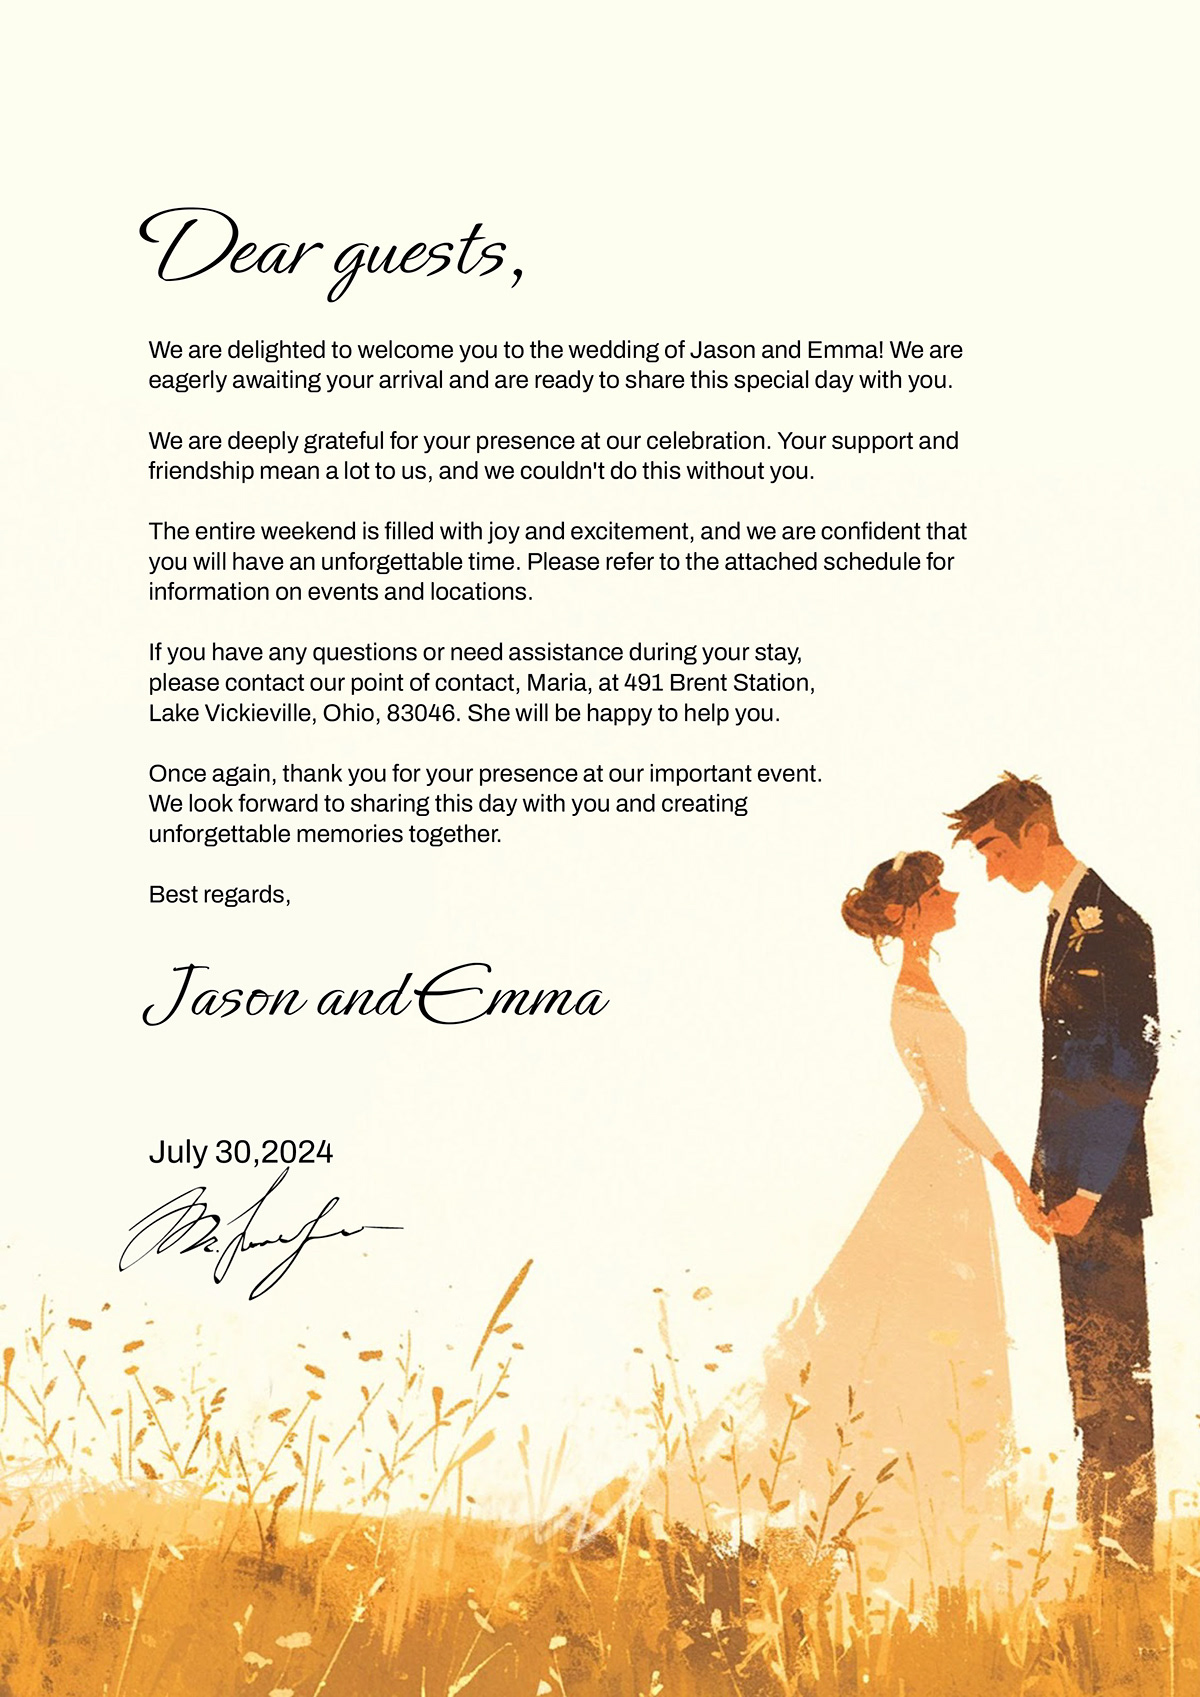 letter design wedding invitation wedding Wedding Card free freebie download Welcome Letter